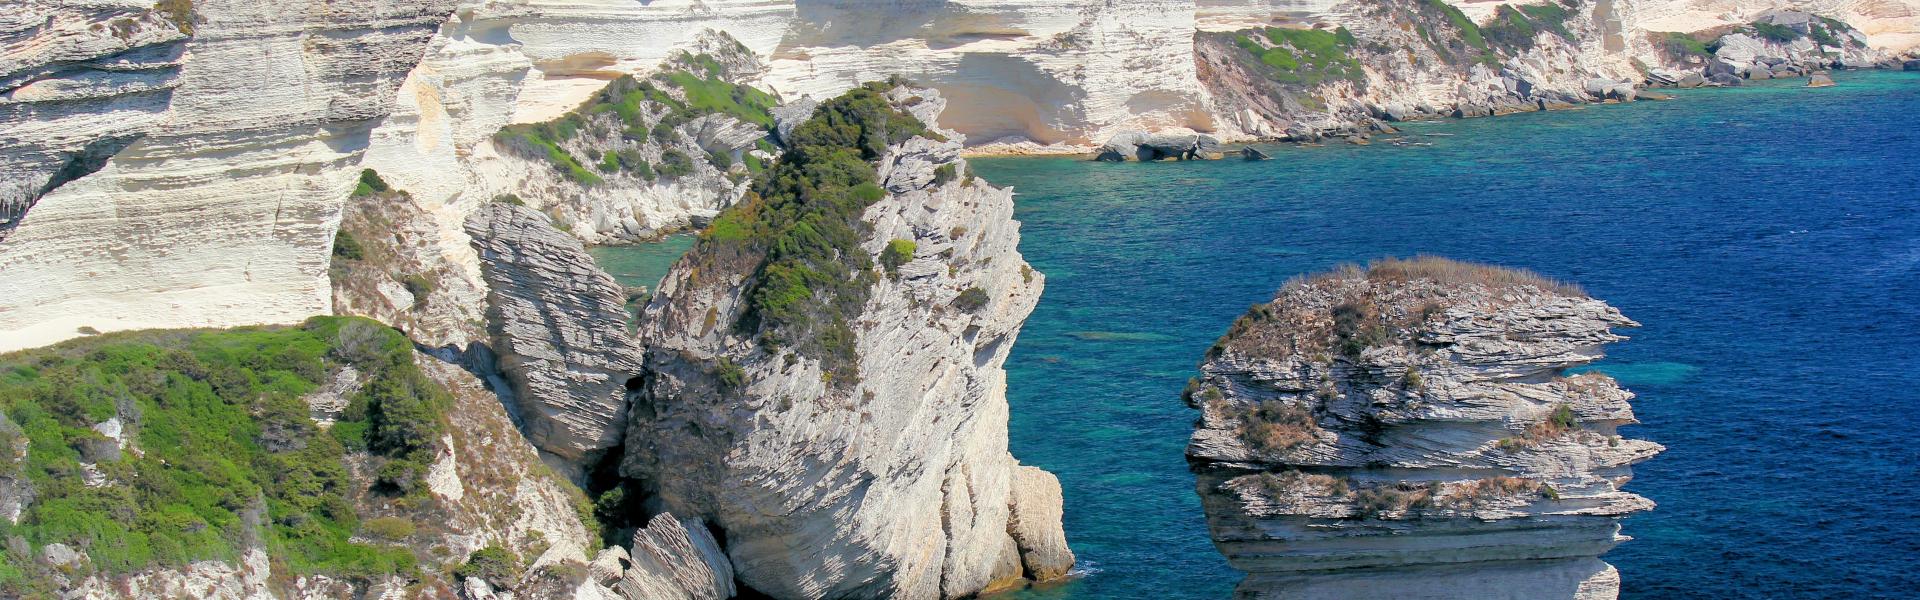 Location de vacances à Grosseto-Prugna - Corse-du-Sud - amivac